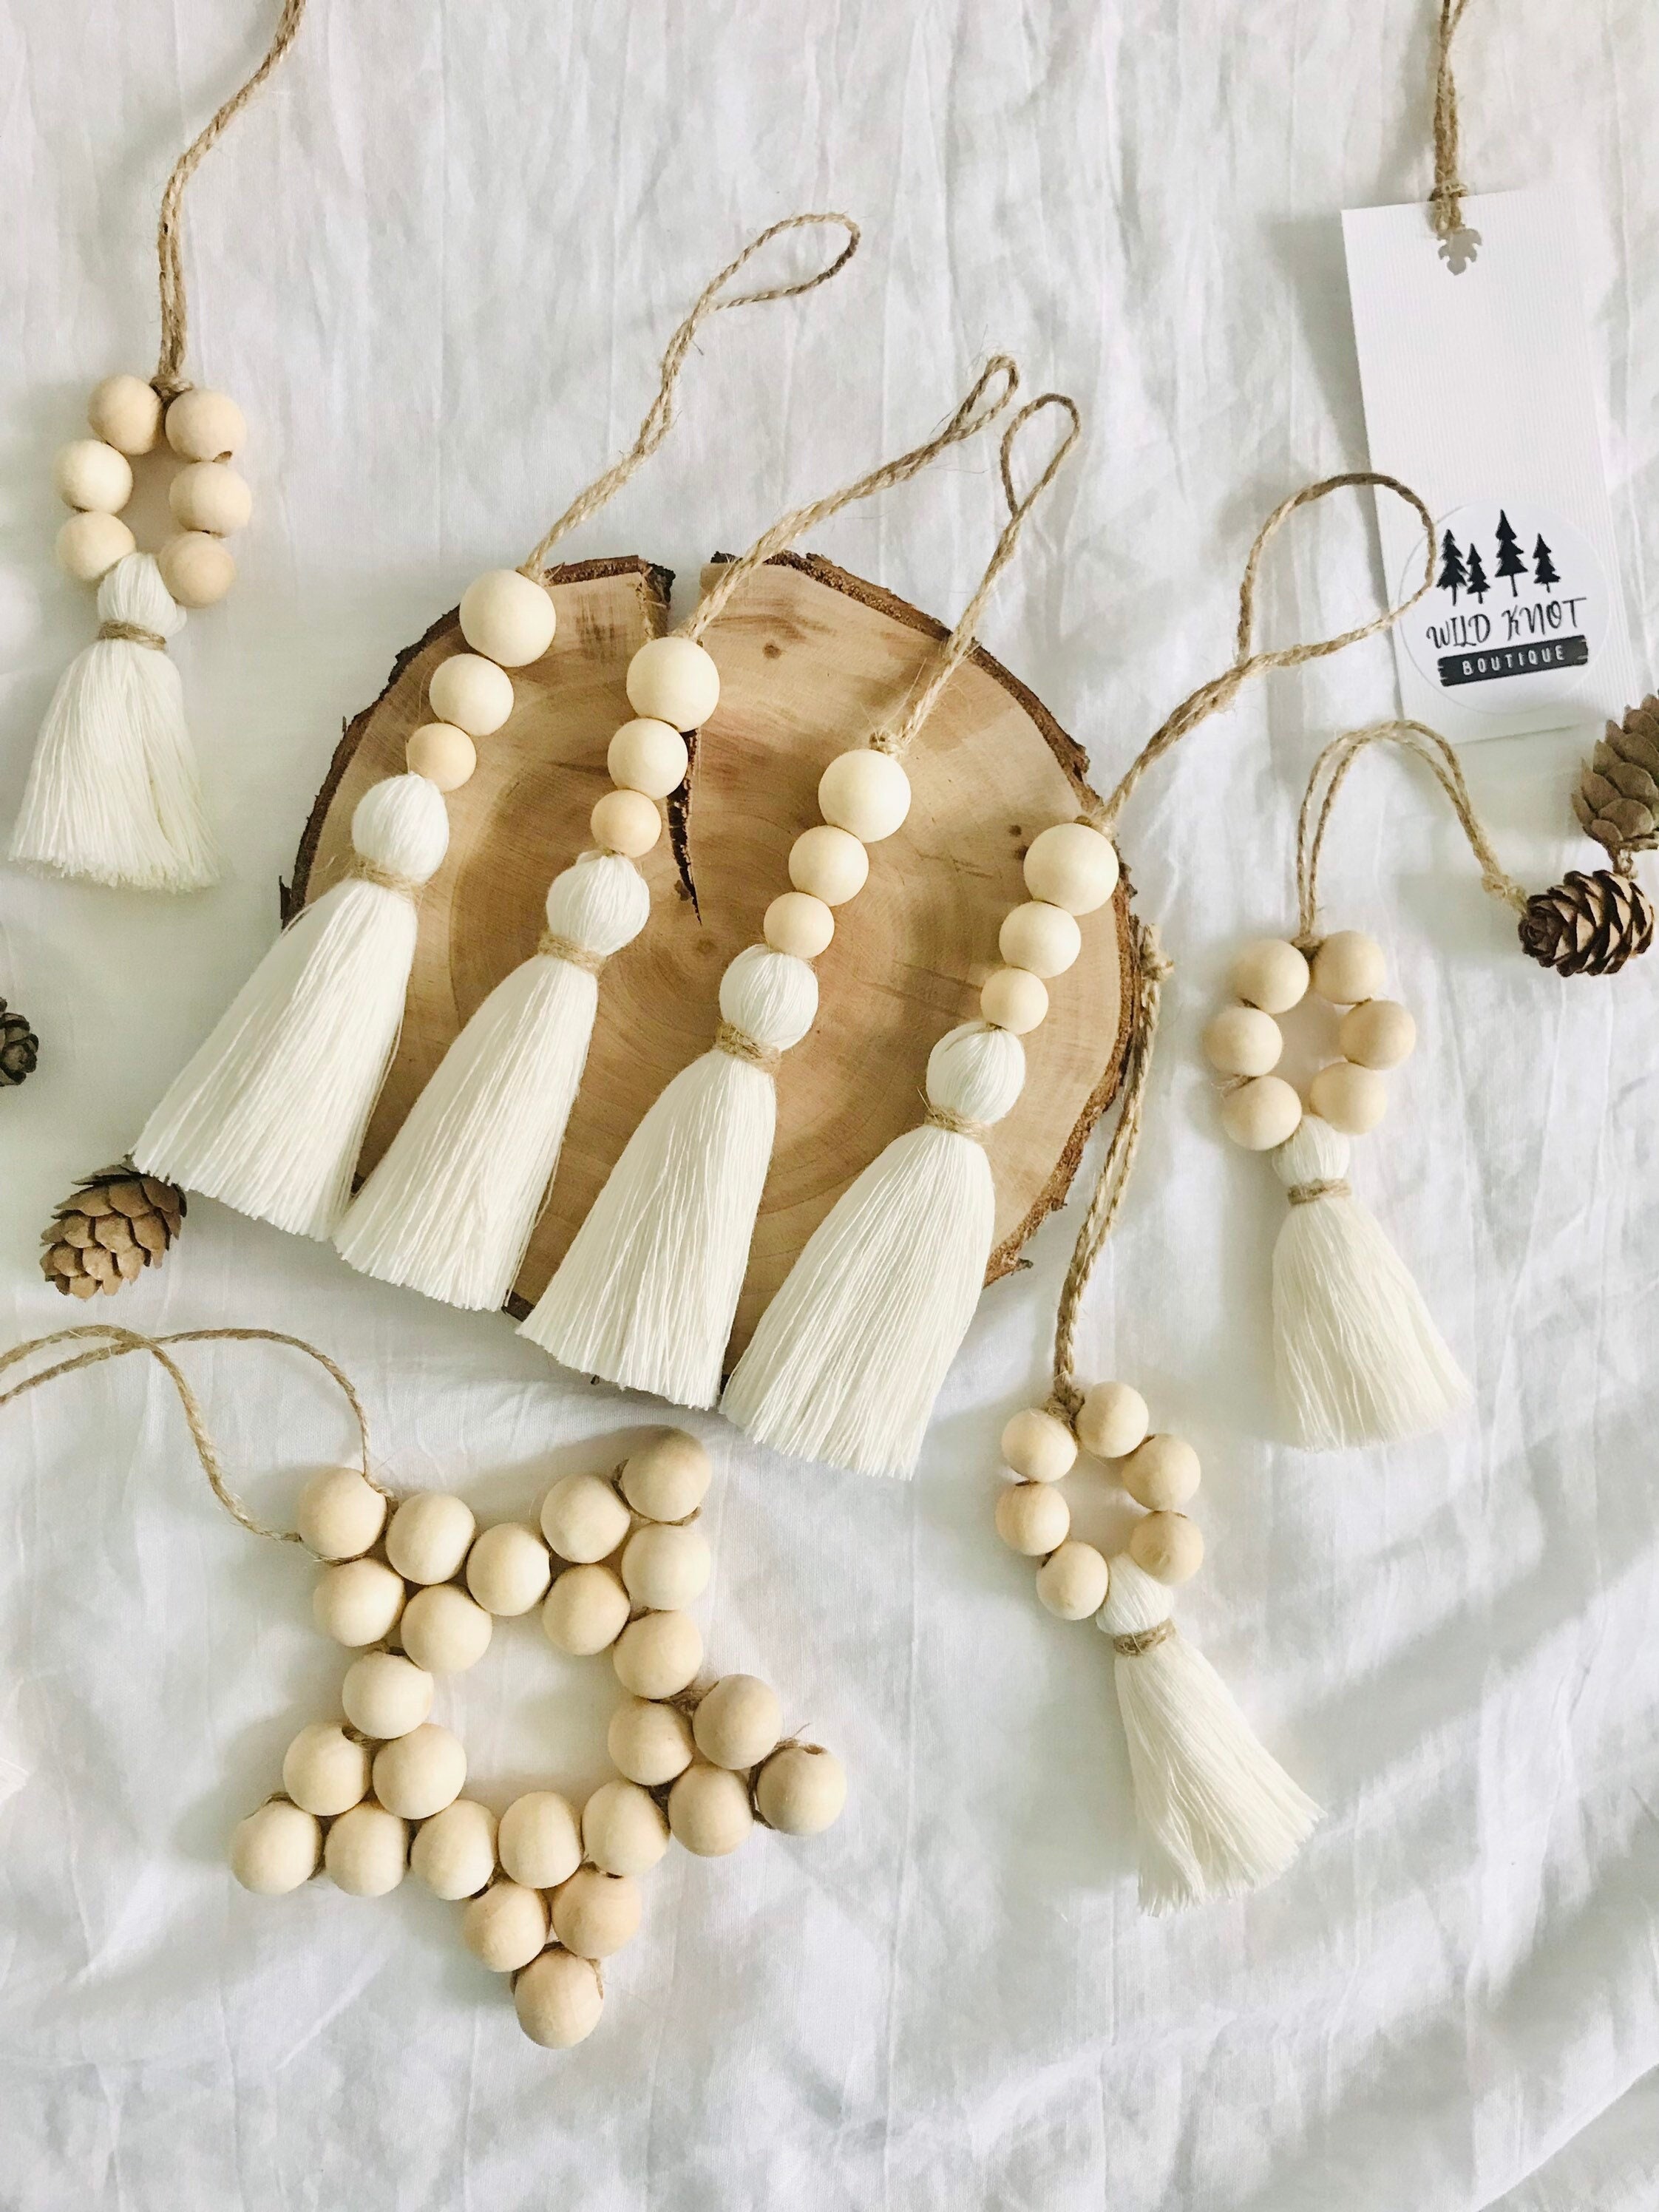 Wood Beads // Macrame DIY Supplies